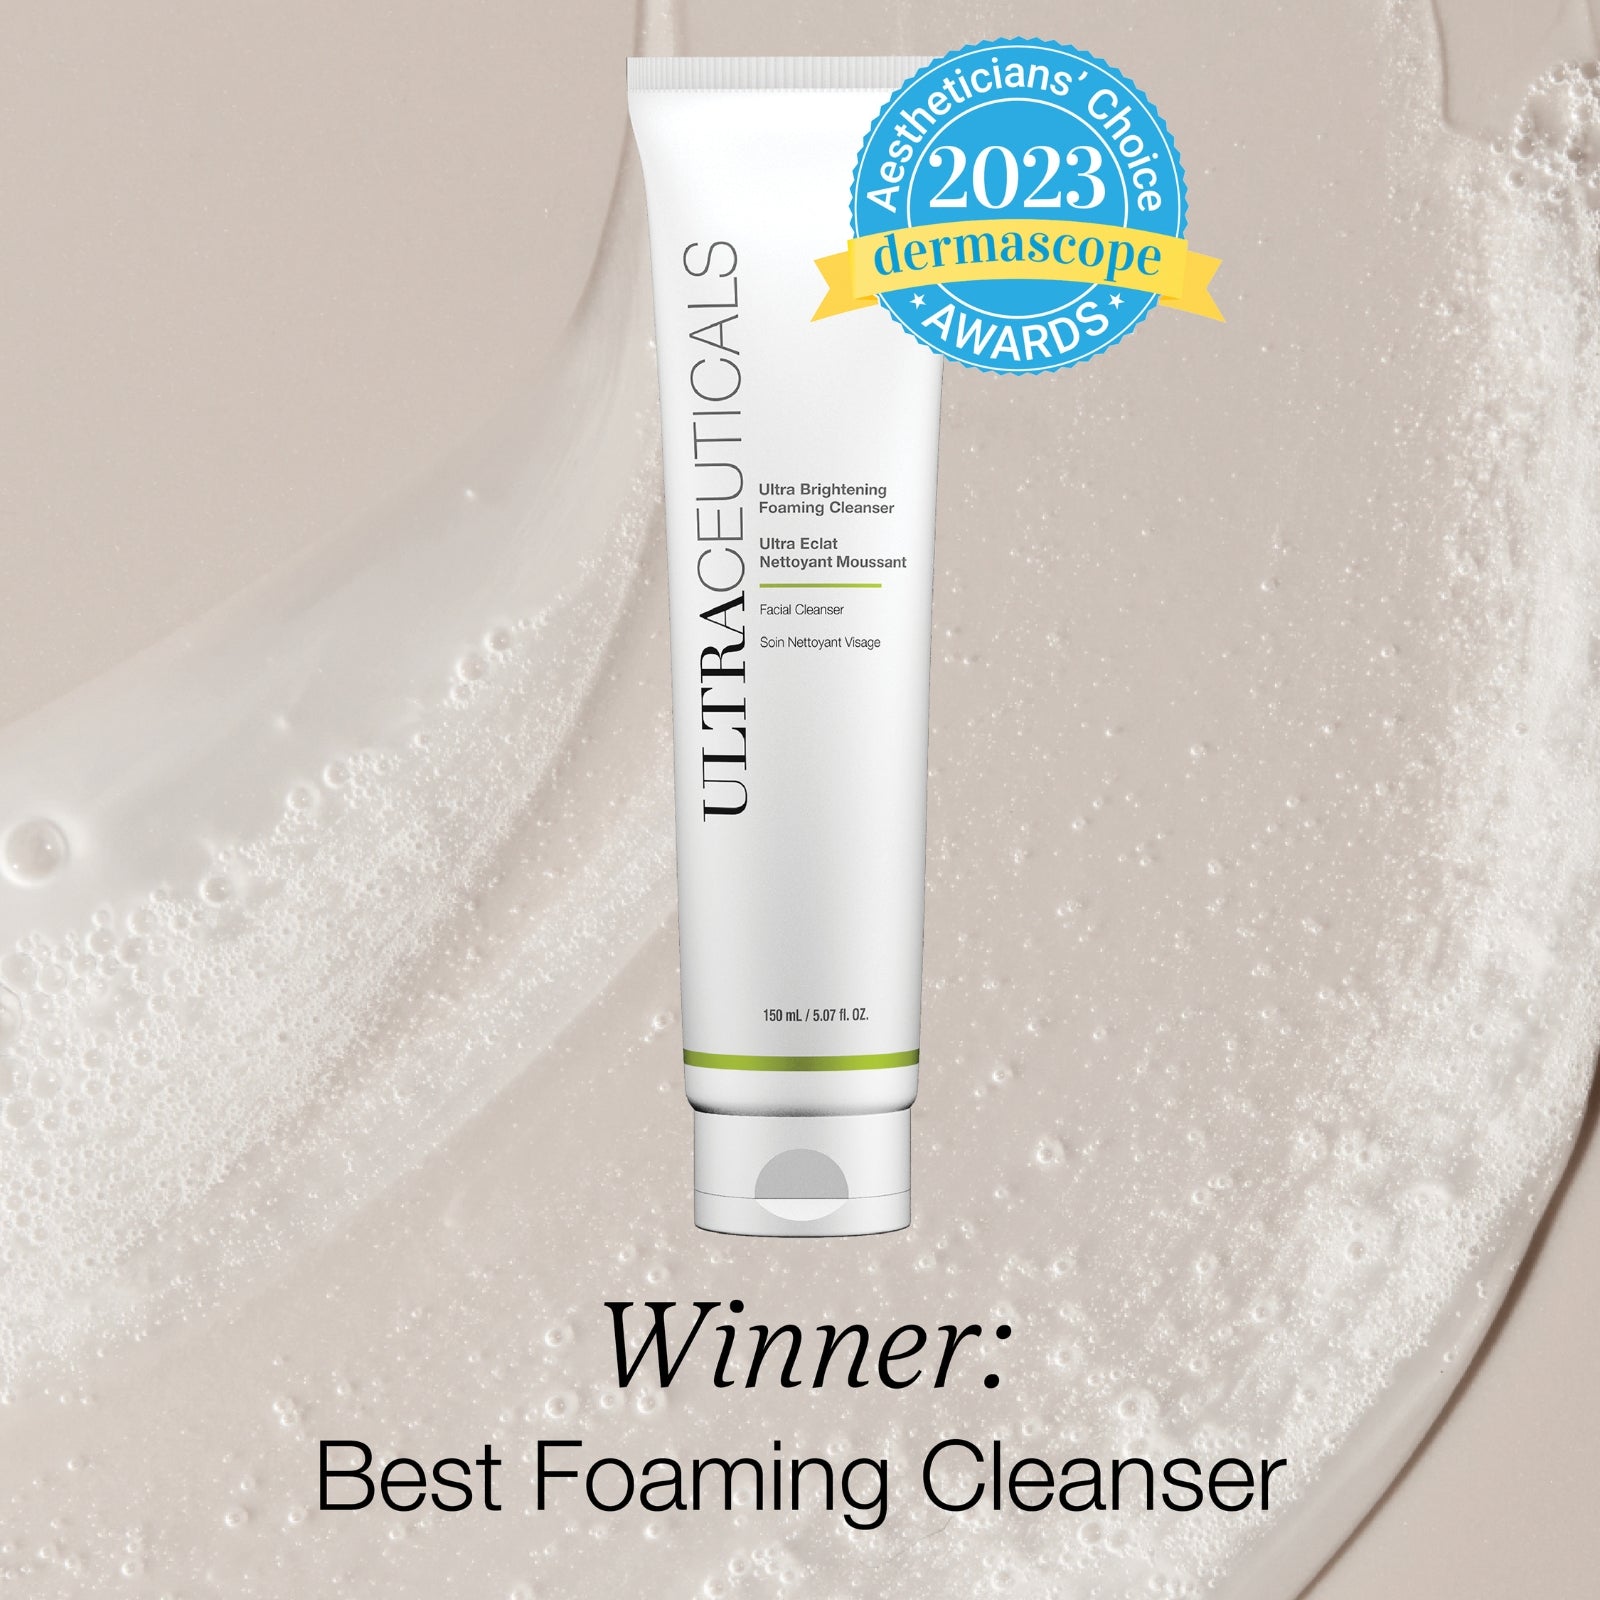 Ultra Brightening Foaming Cleanser Award Best Foaming Cleanser